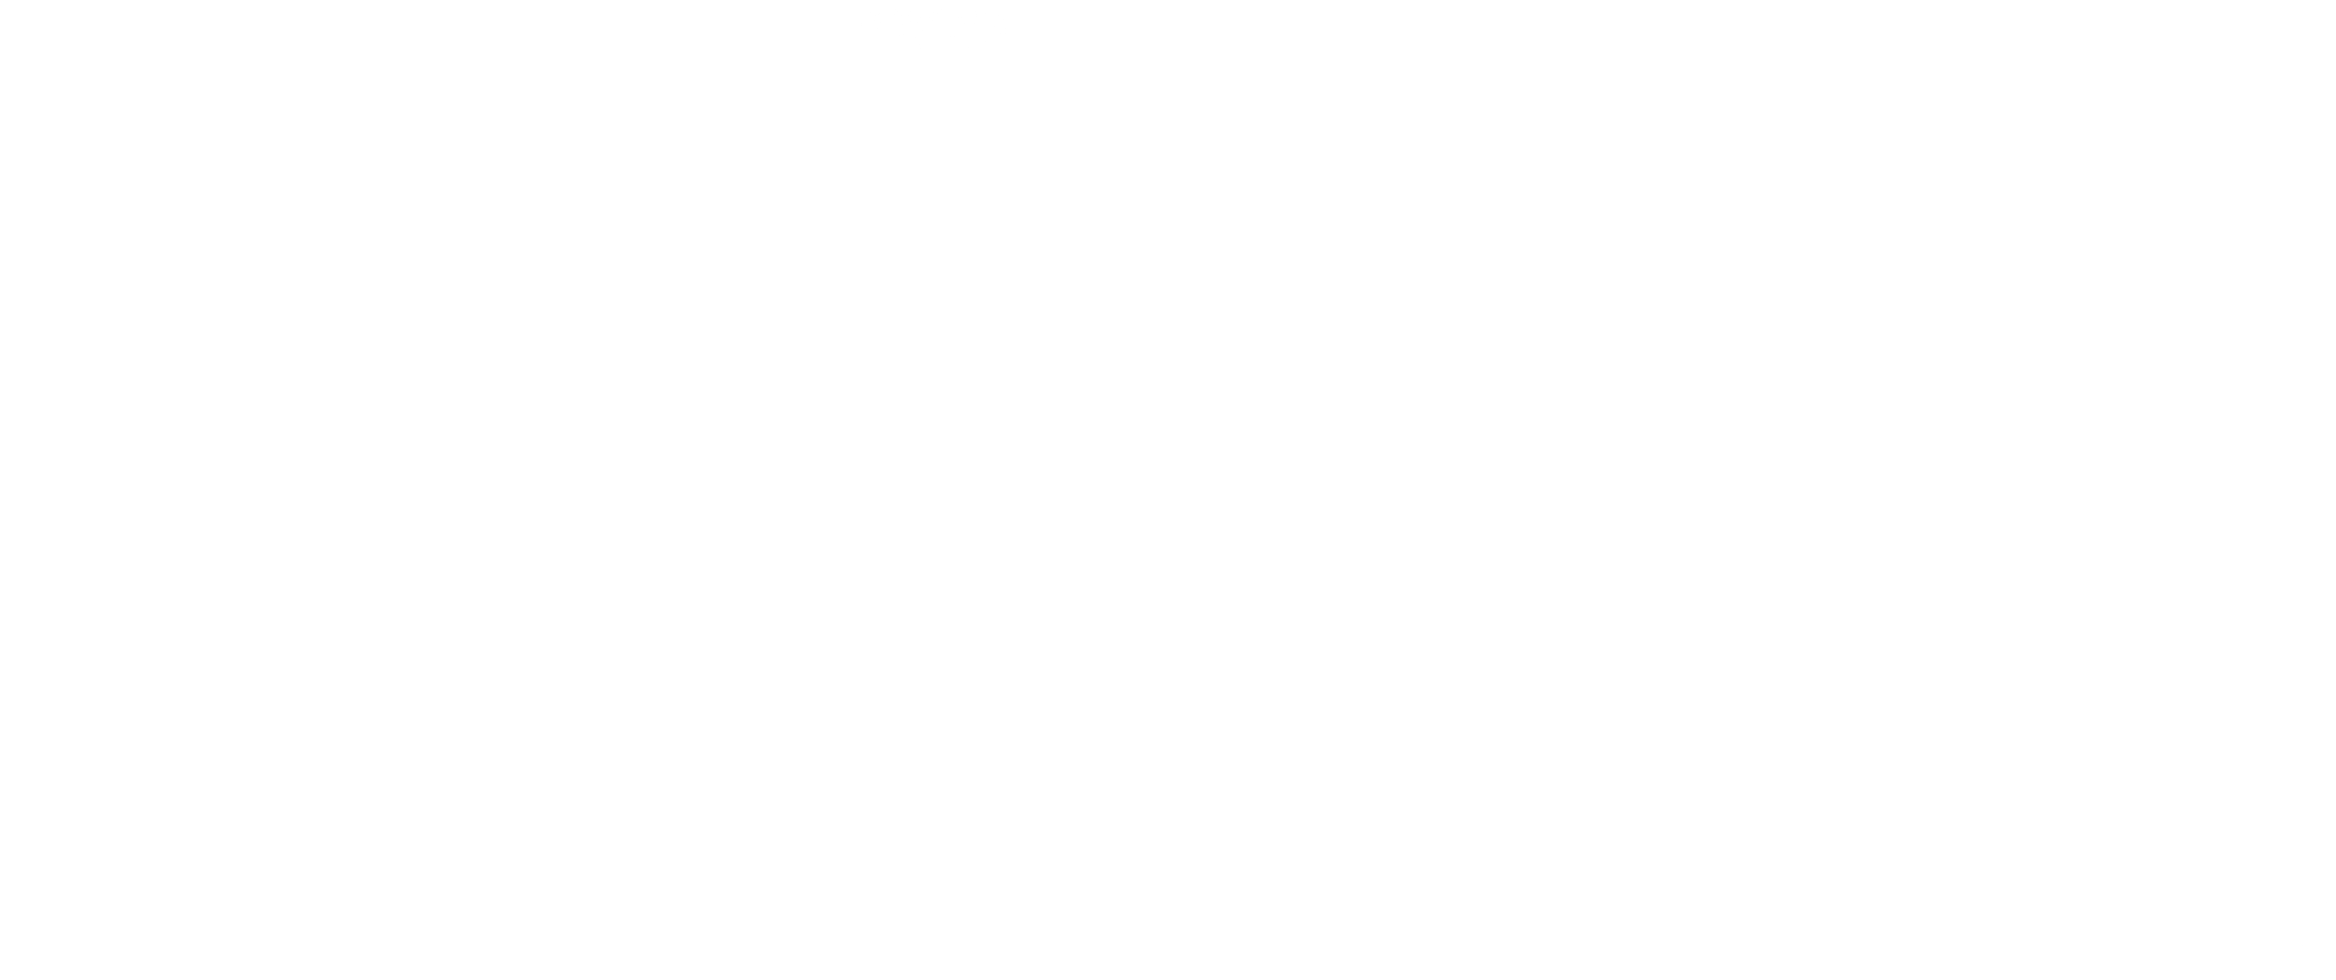 German_design-awards-logo-White-transparent